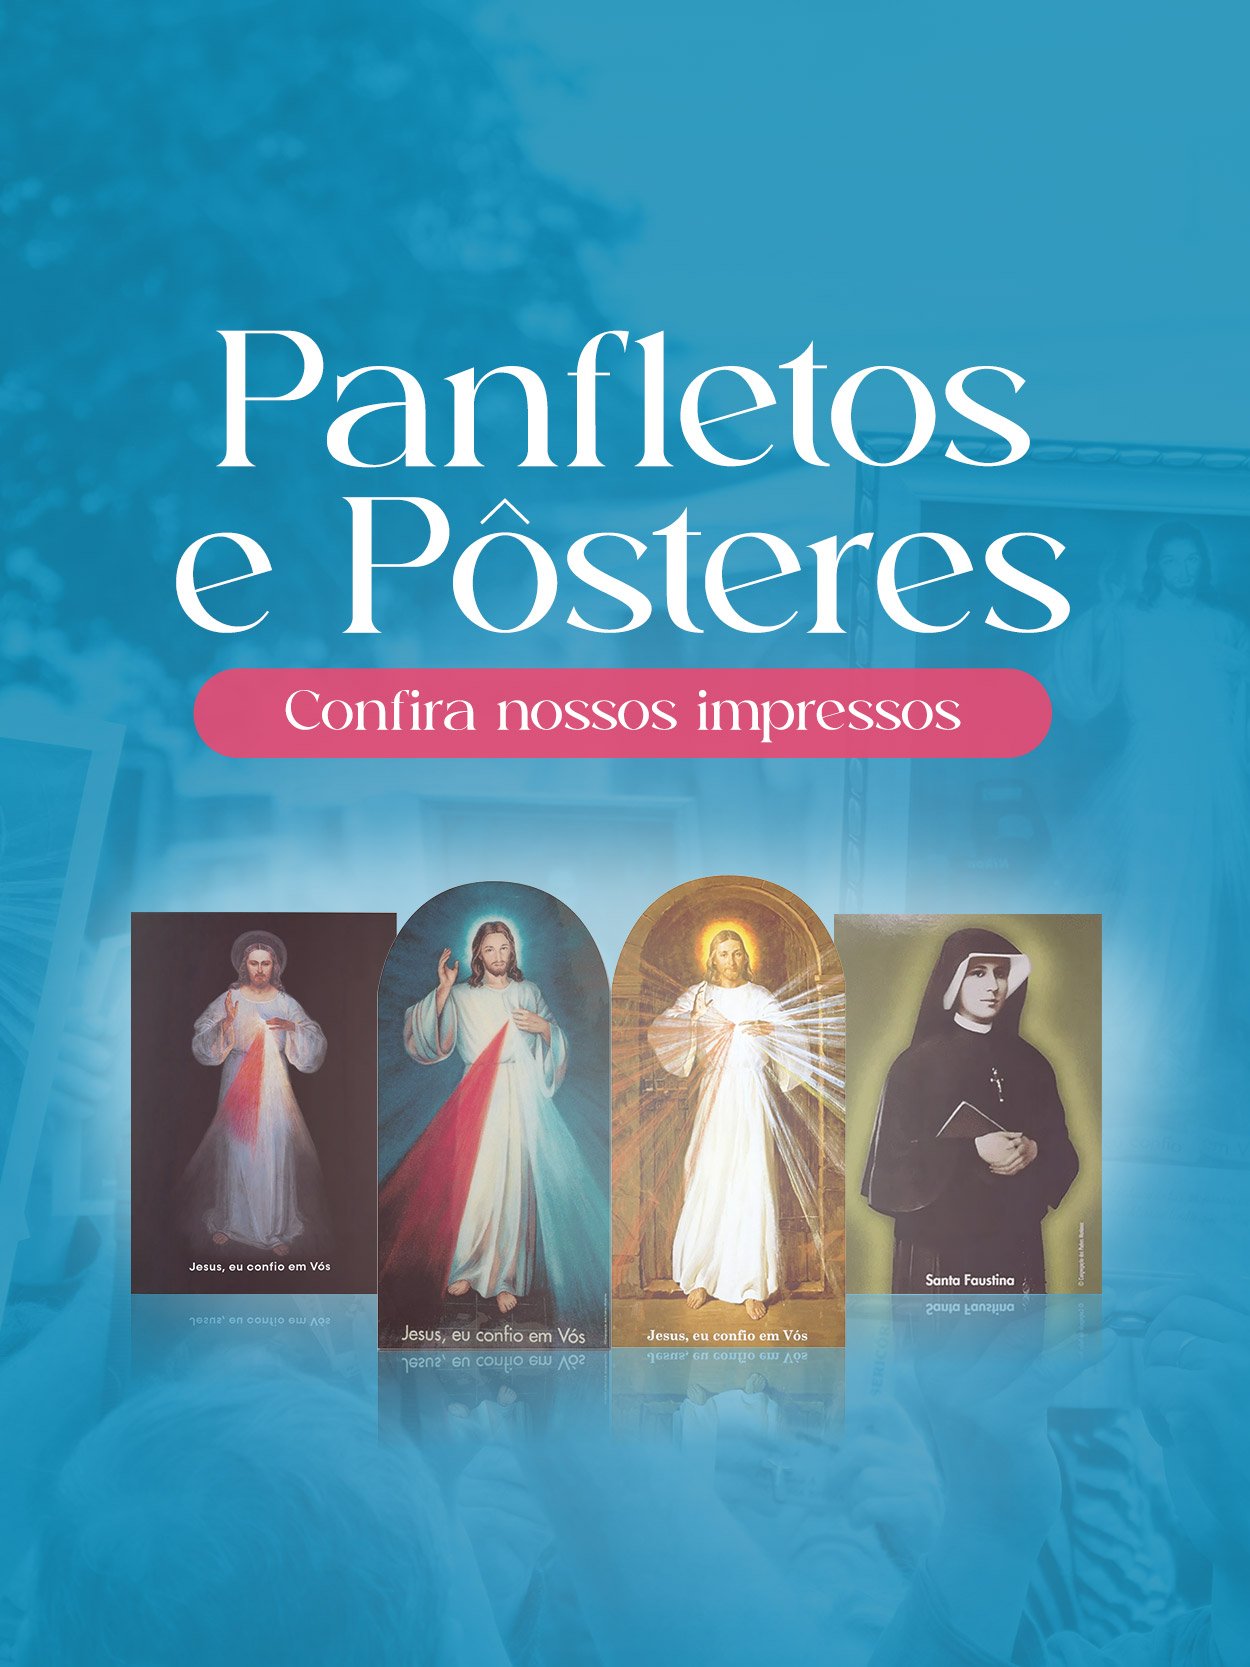 panfletos-posteres-divinamisericordia-m